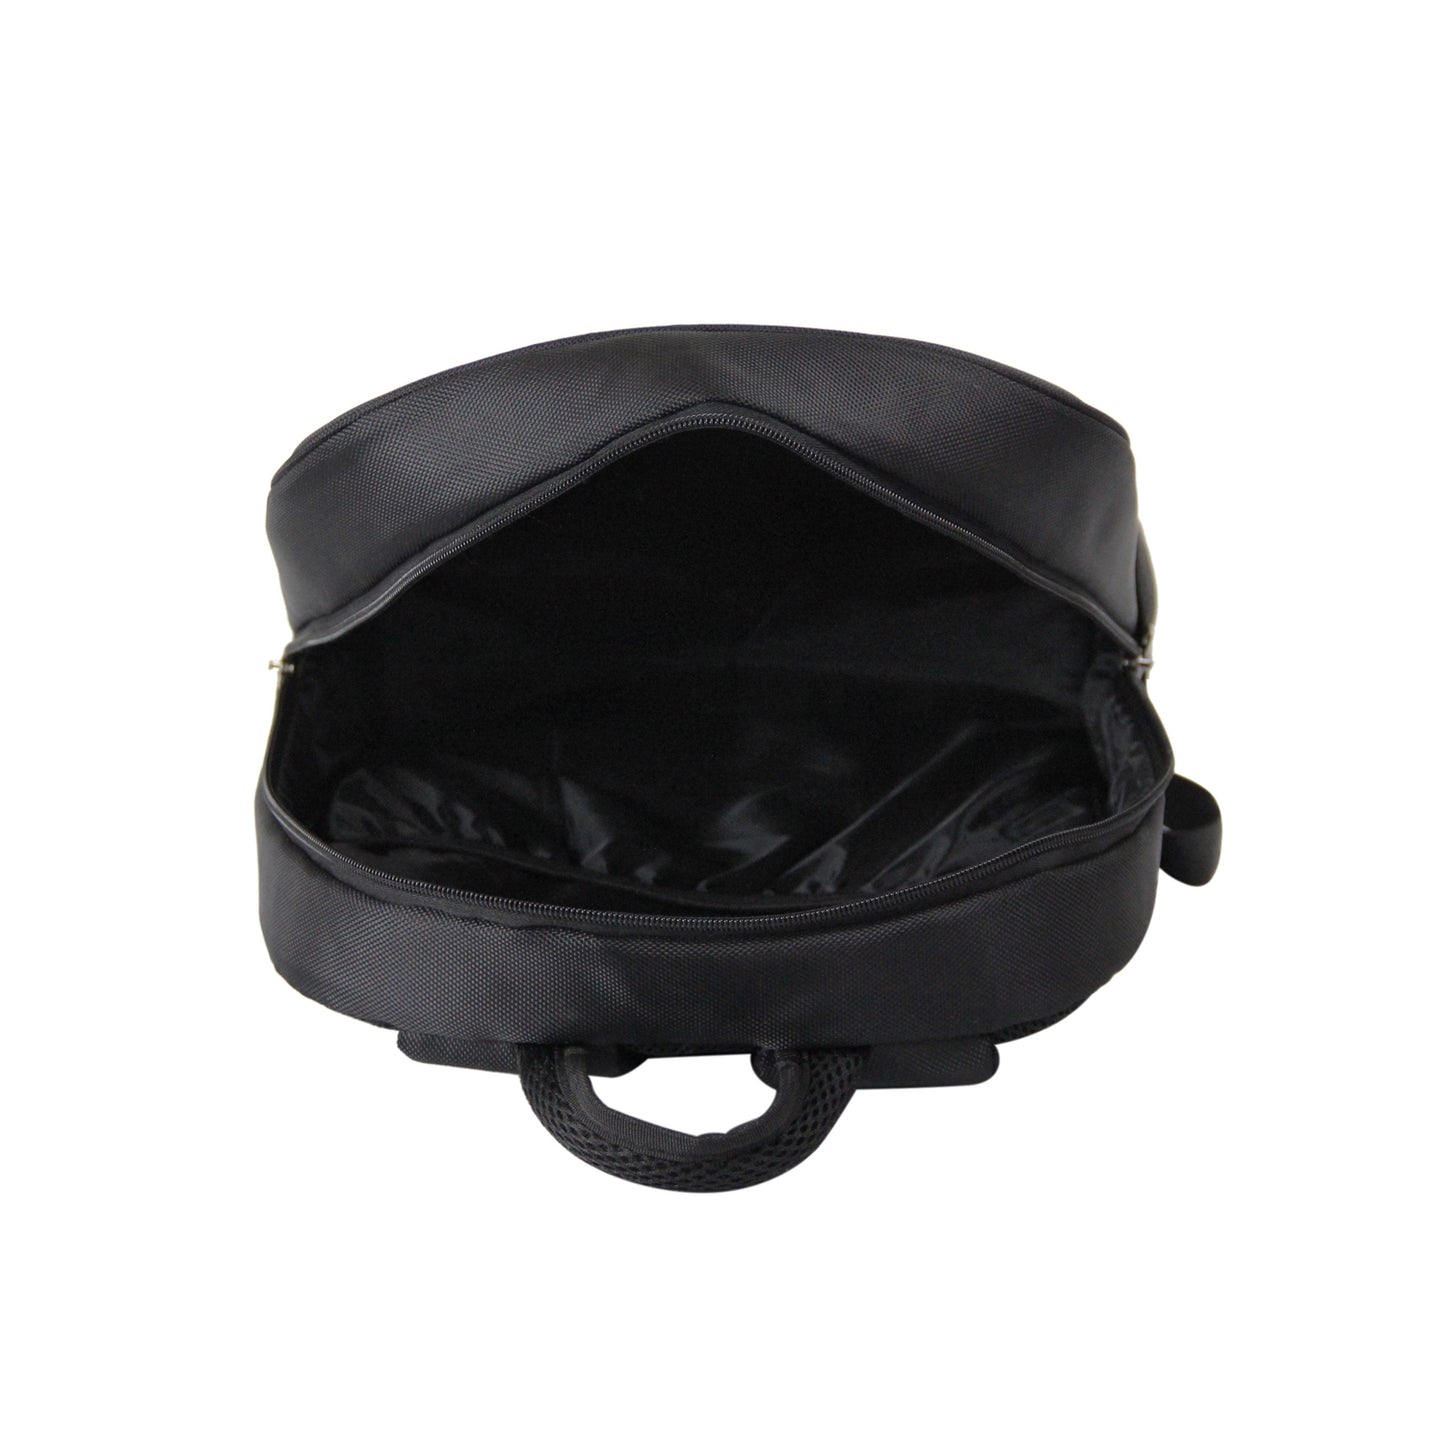 Black Polyester Regular Backpack